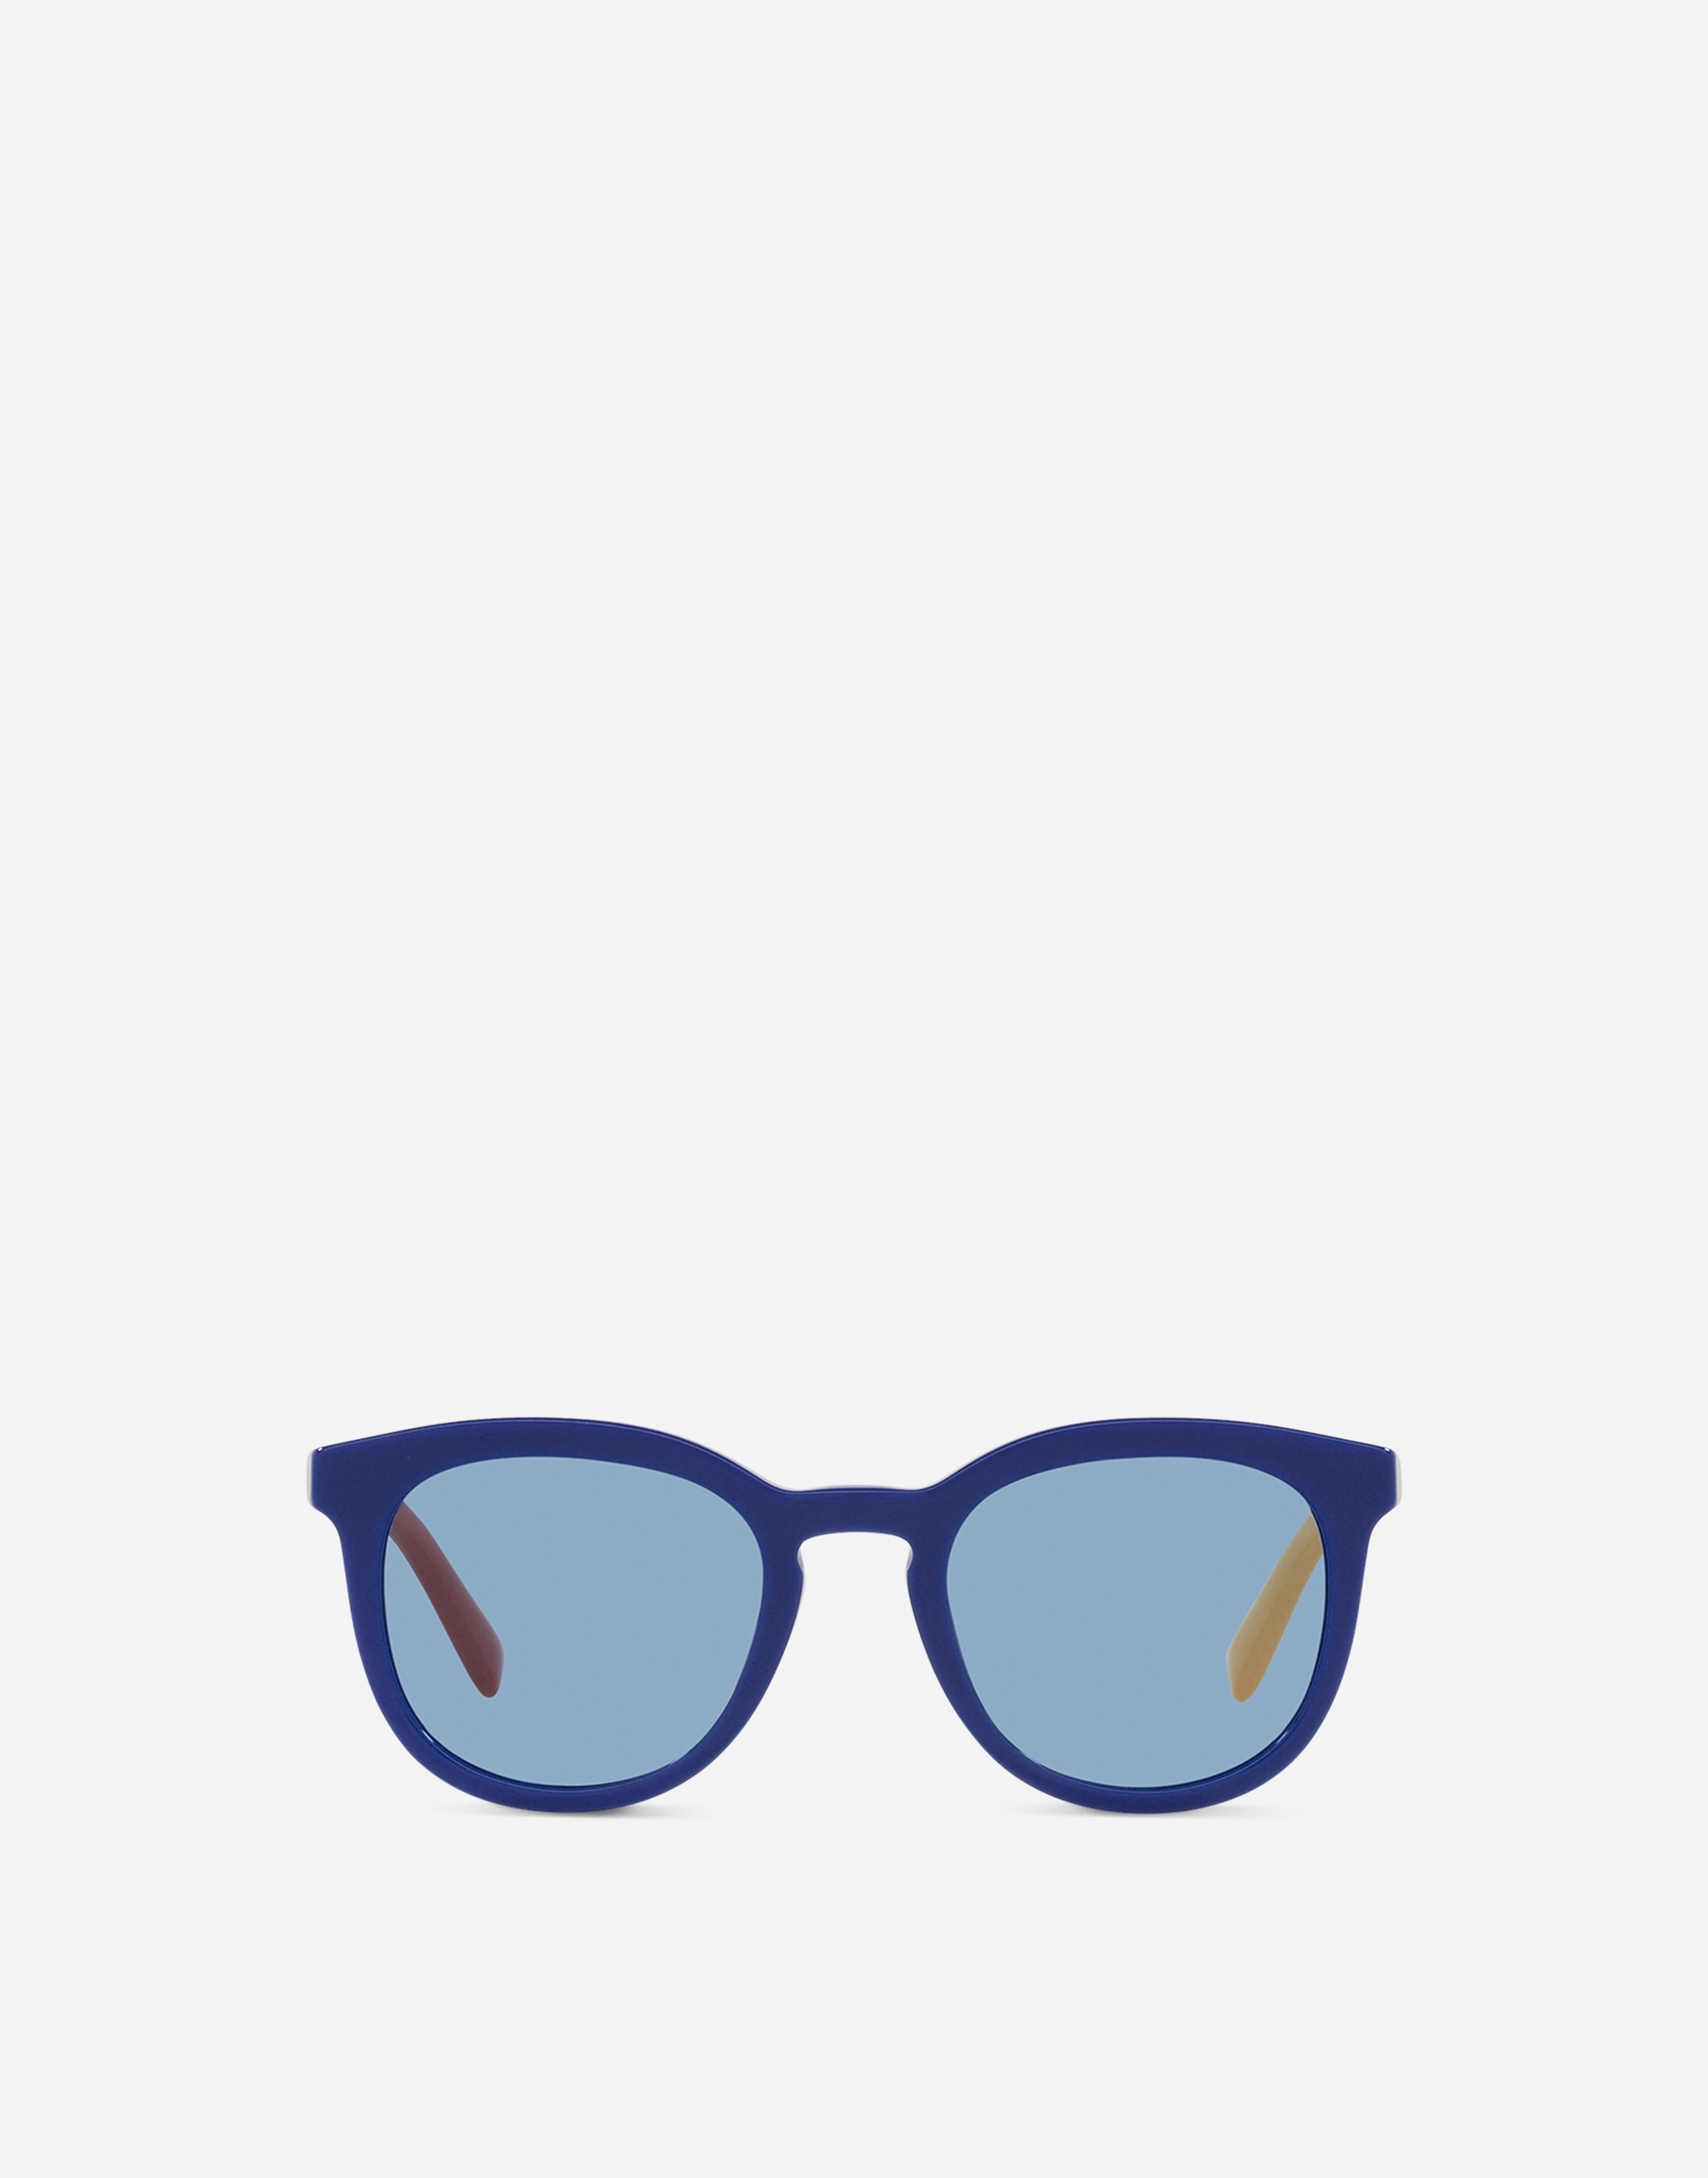 Street sunglasses in Blue